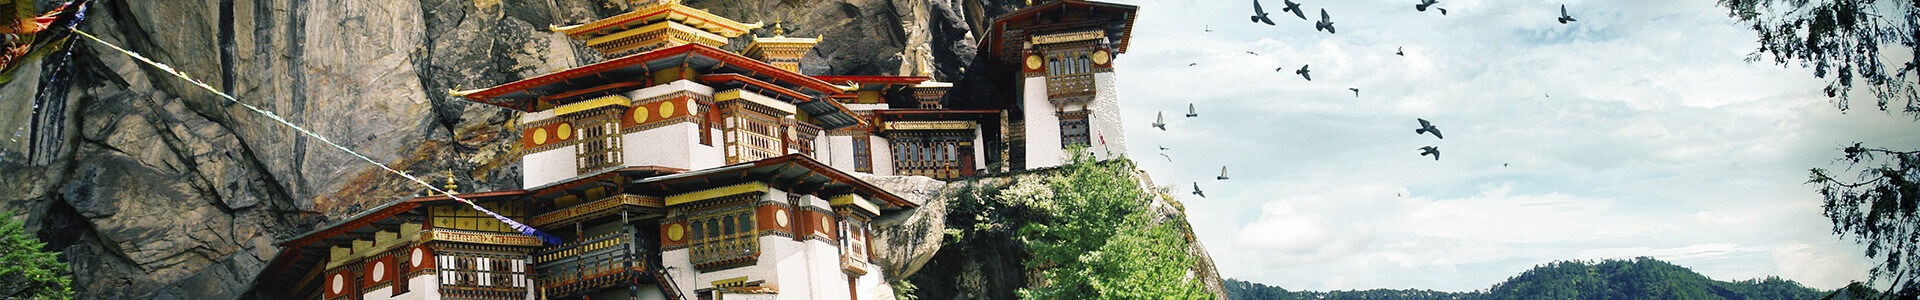 Voyage au Bhoutan - TUI